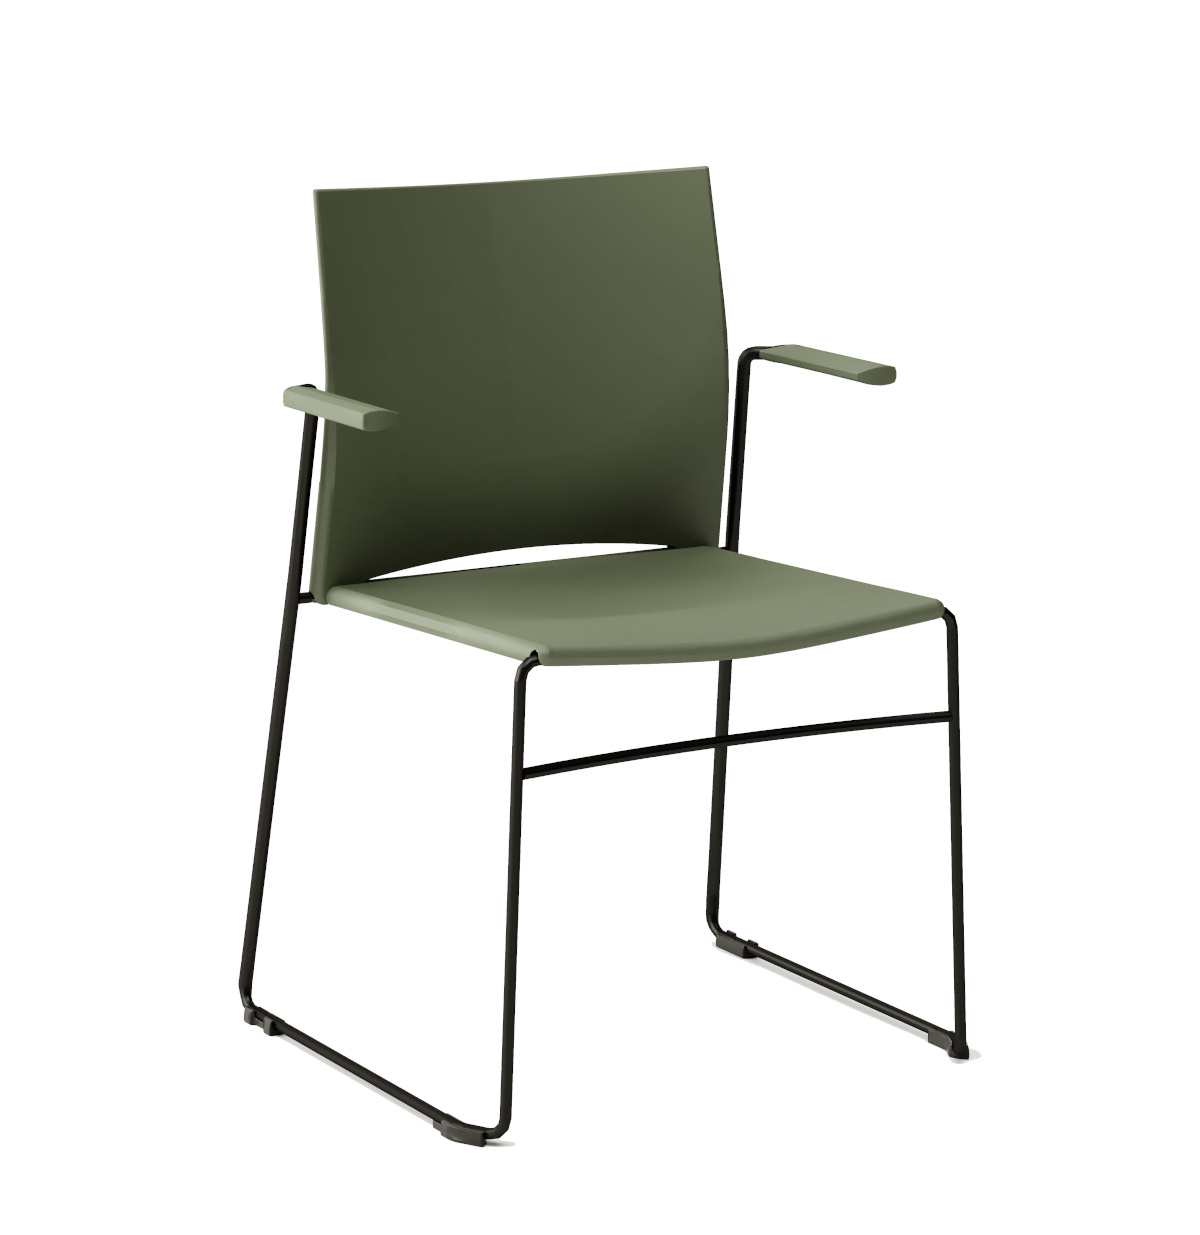 Ariz 550V Stuhl, Kufengestell, Sitz und Rückenlehne aus Kunststoff